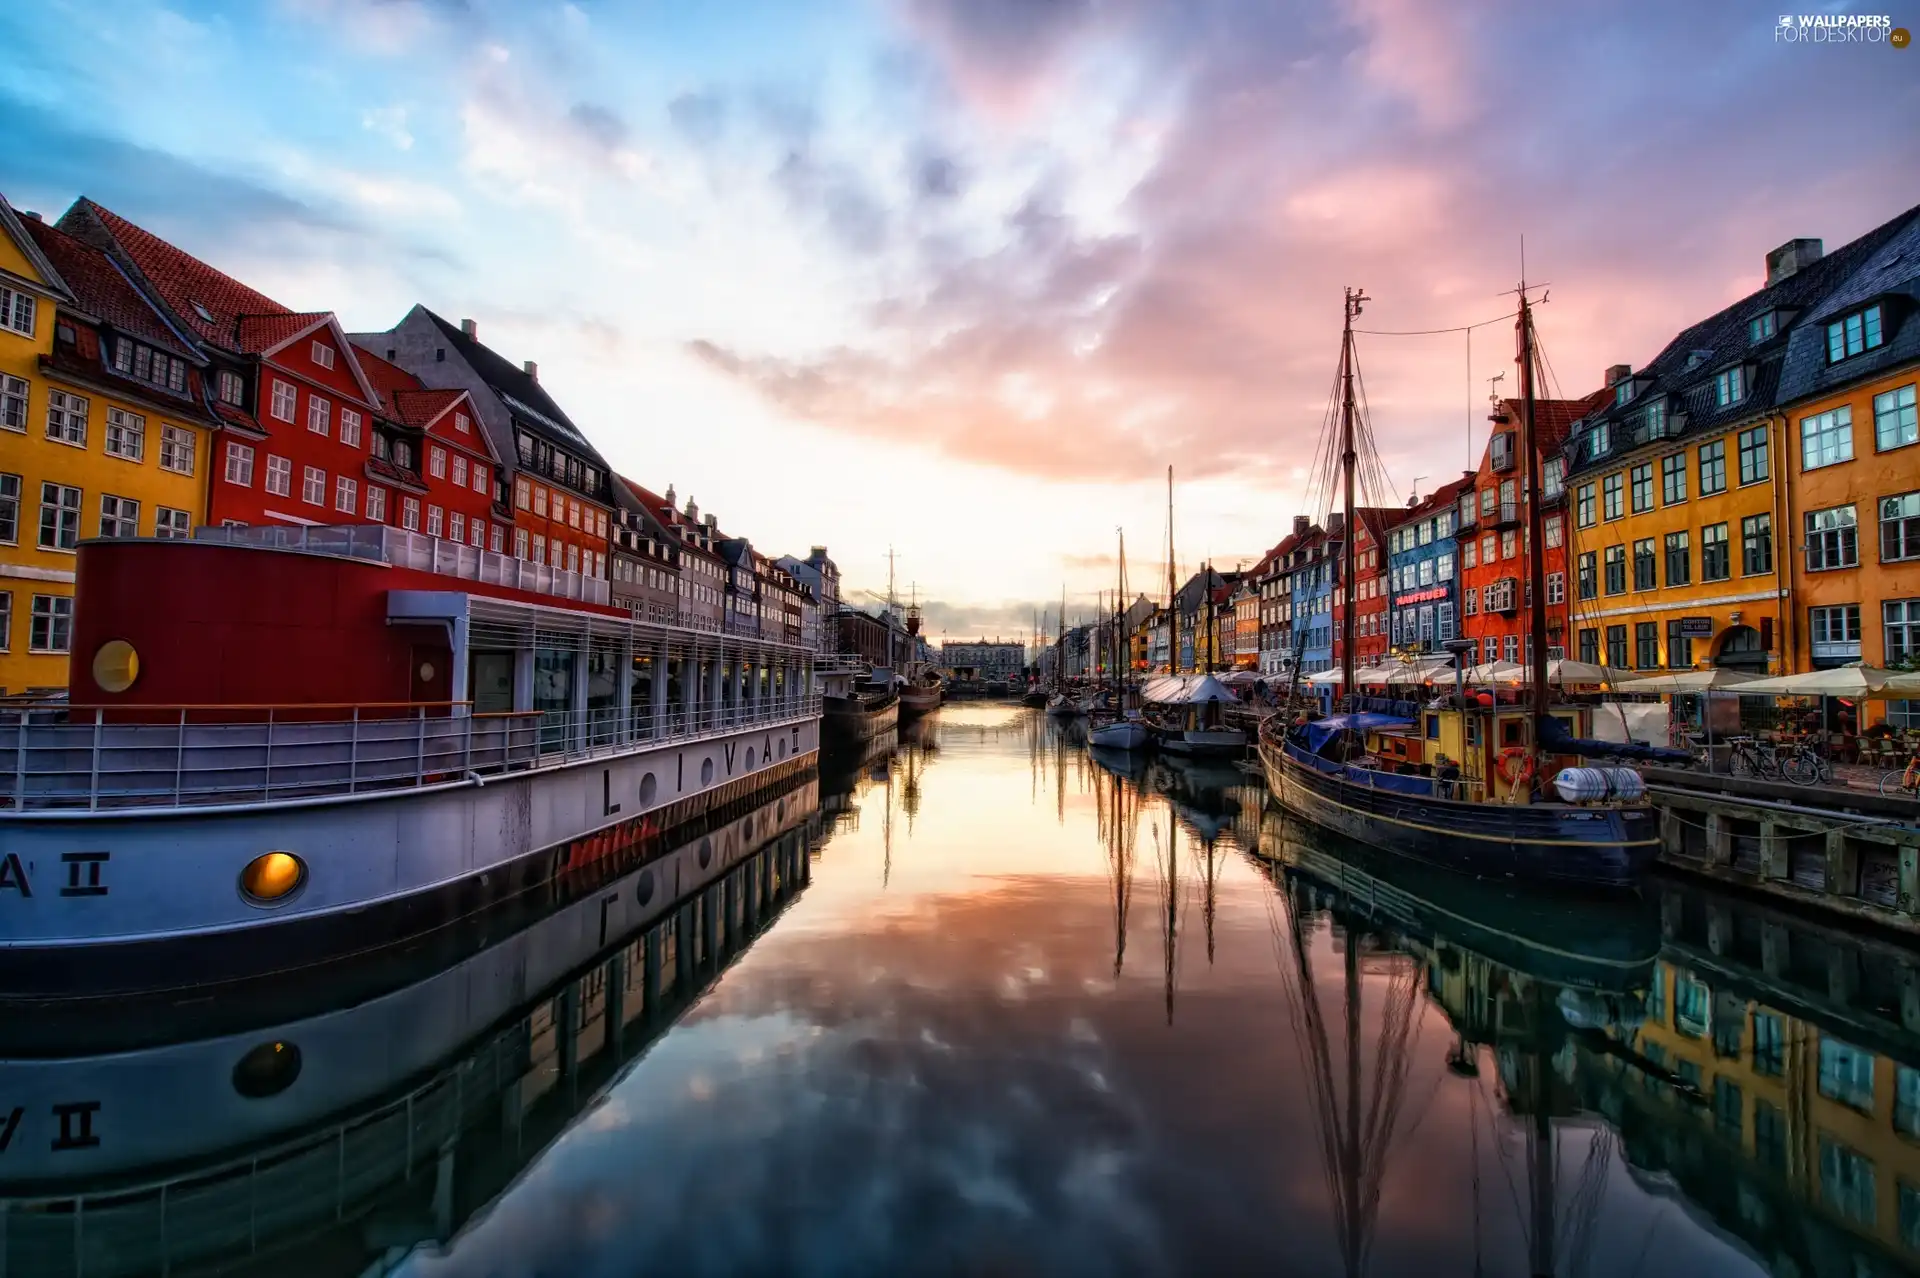 vessels, houses, sun, Nyhavn, west